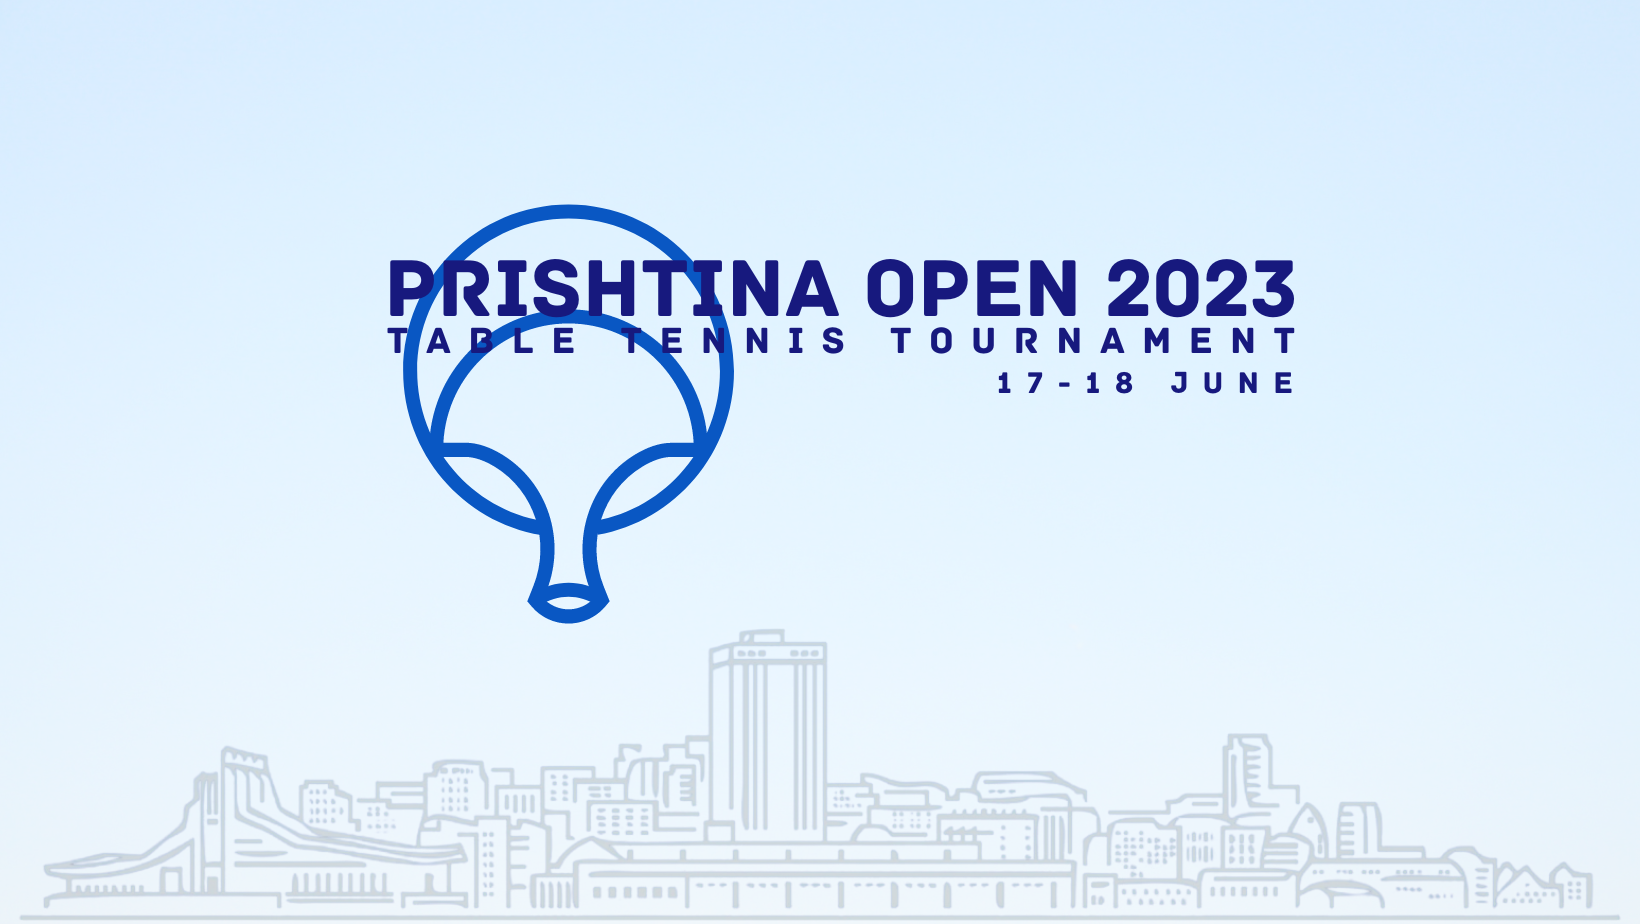 Priping nikoqir i turneut ndërkombëtar “Prishtina Open 2023”